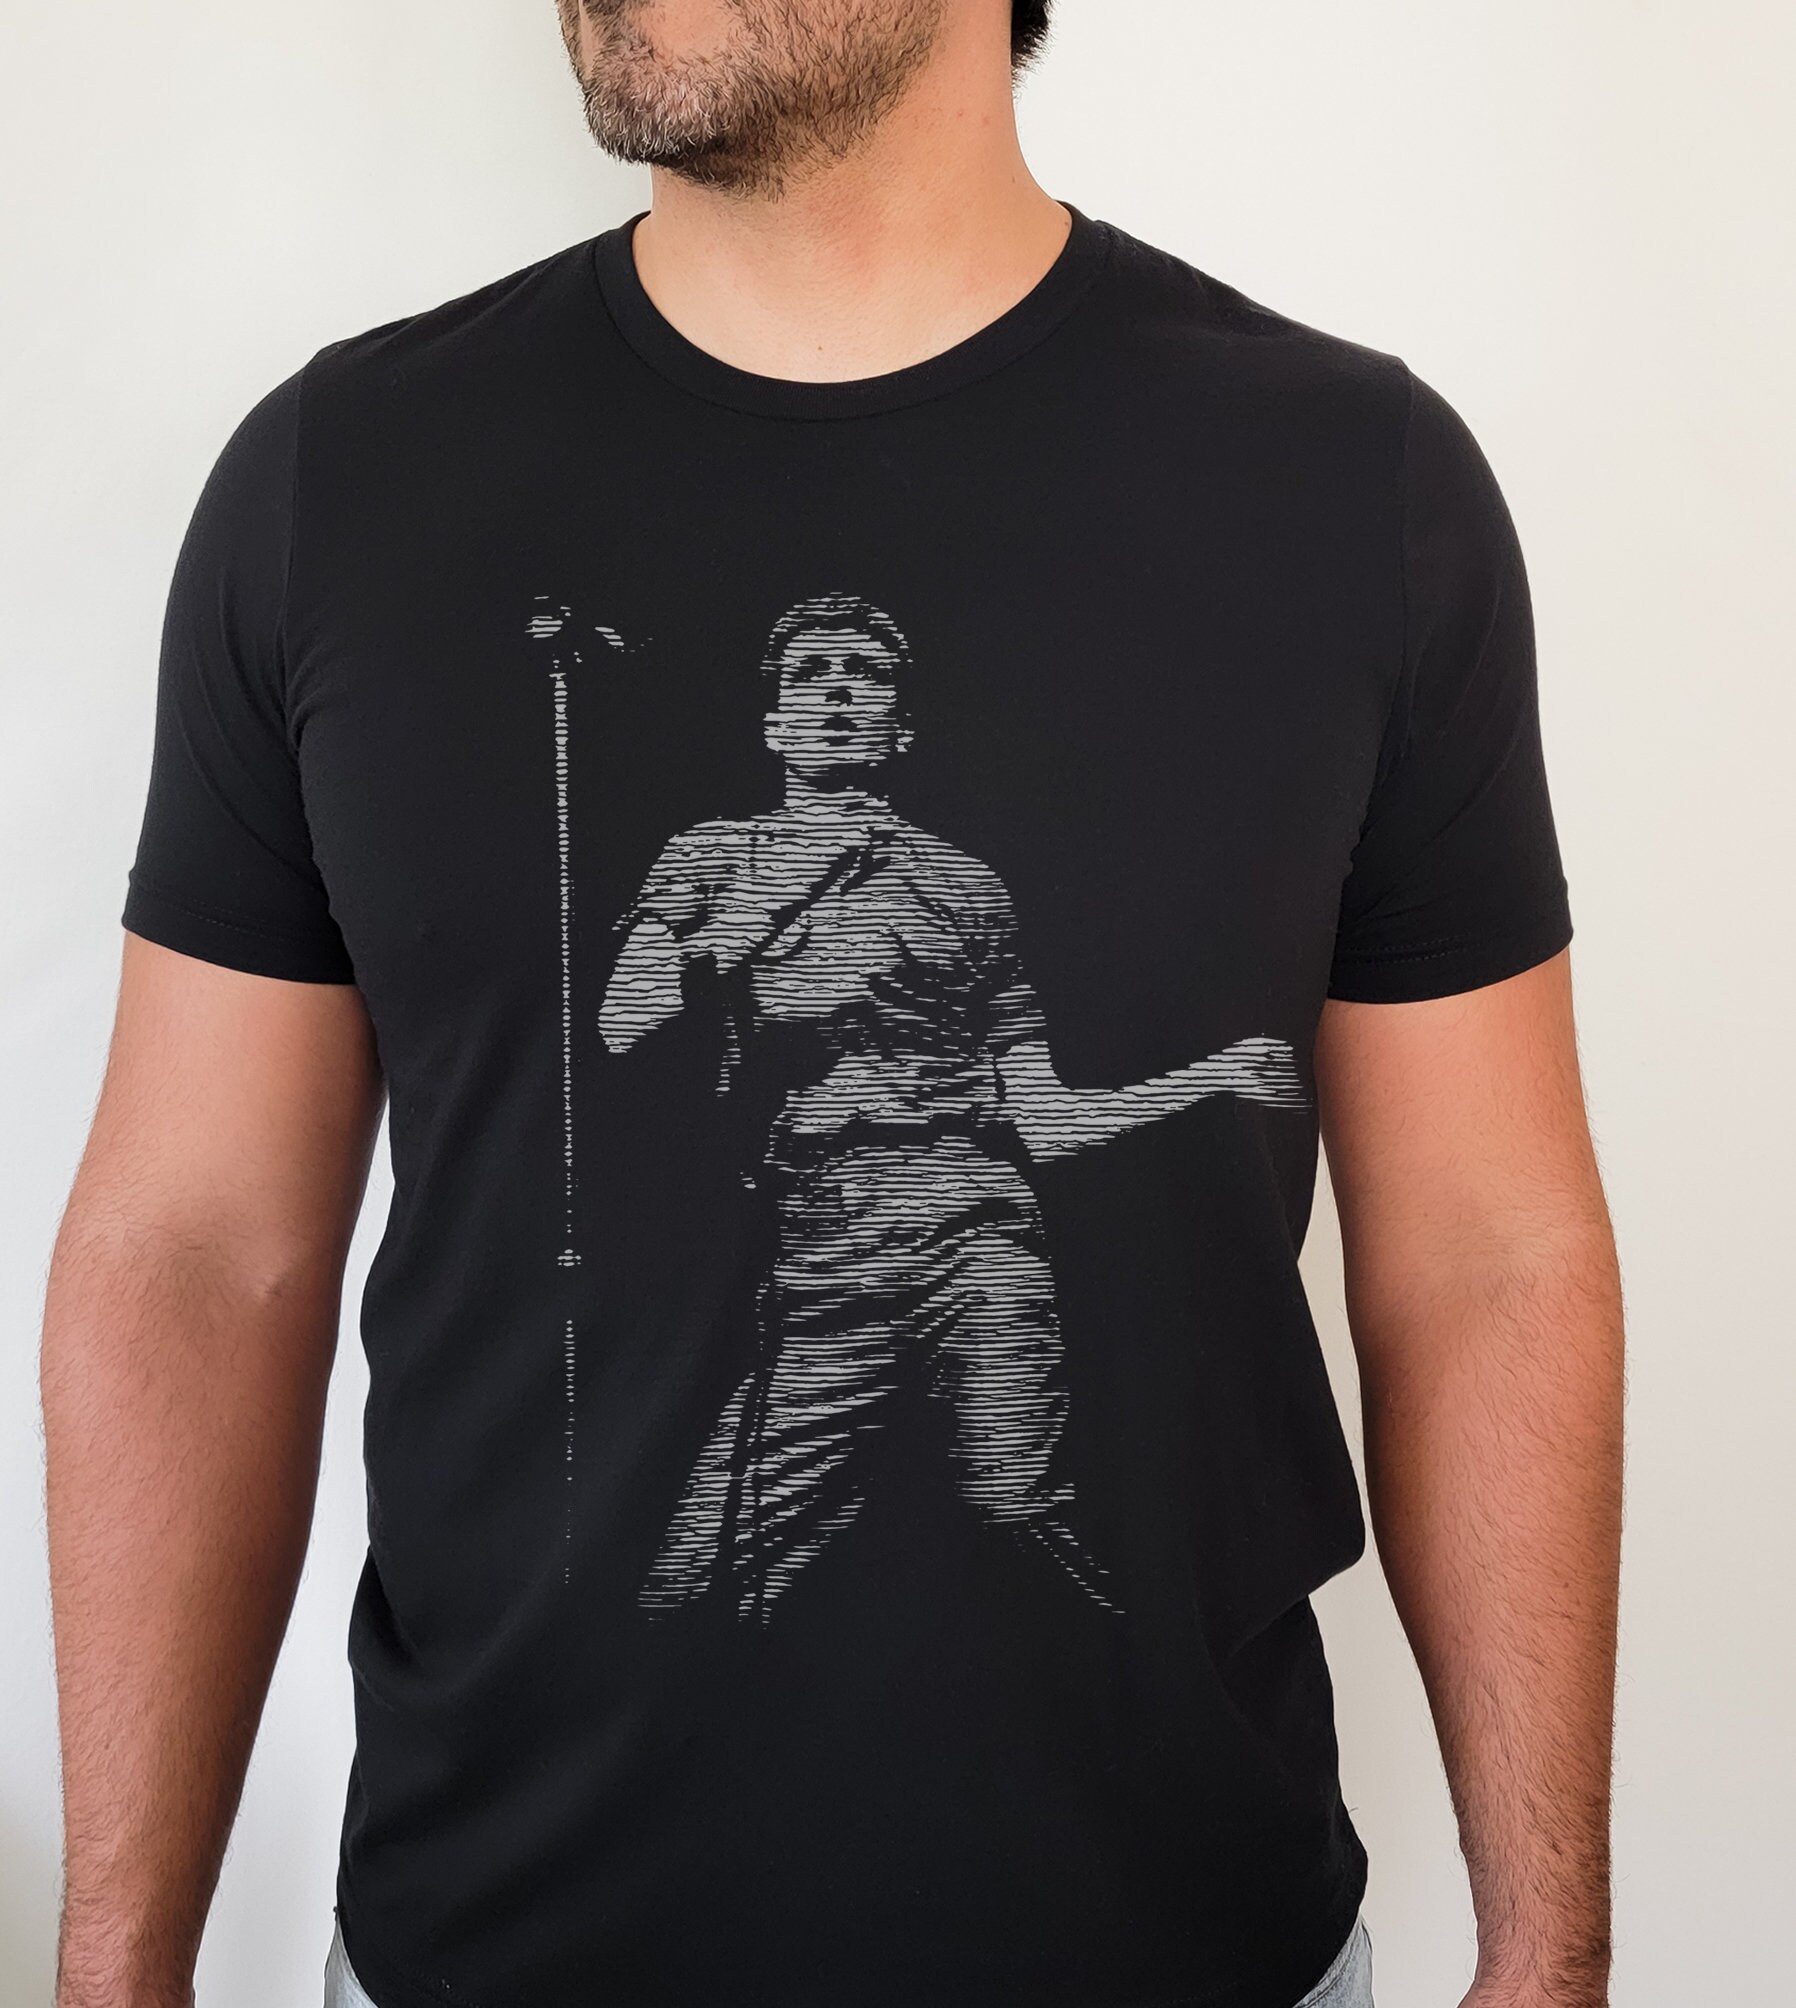 Discover Ian Curtis Shirt Joy Division T-Shirt Unknown Pleasures Tshirt